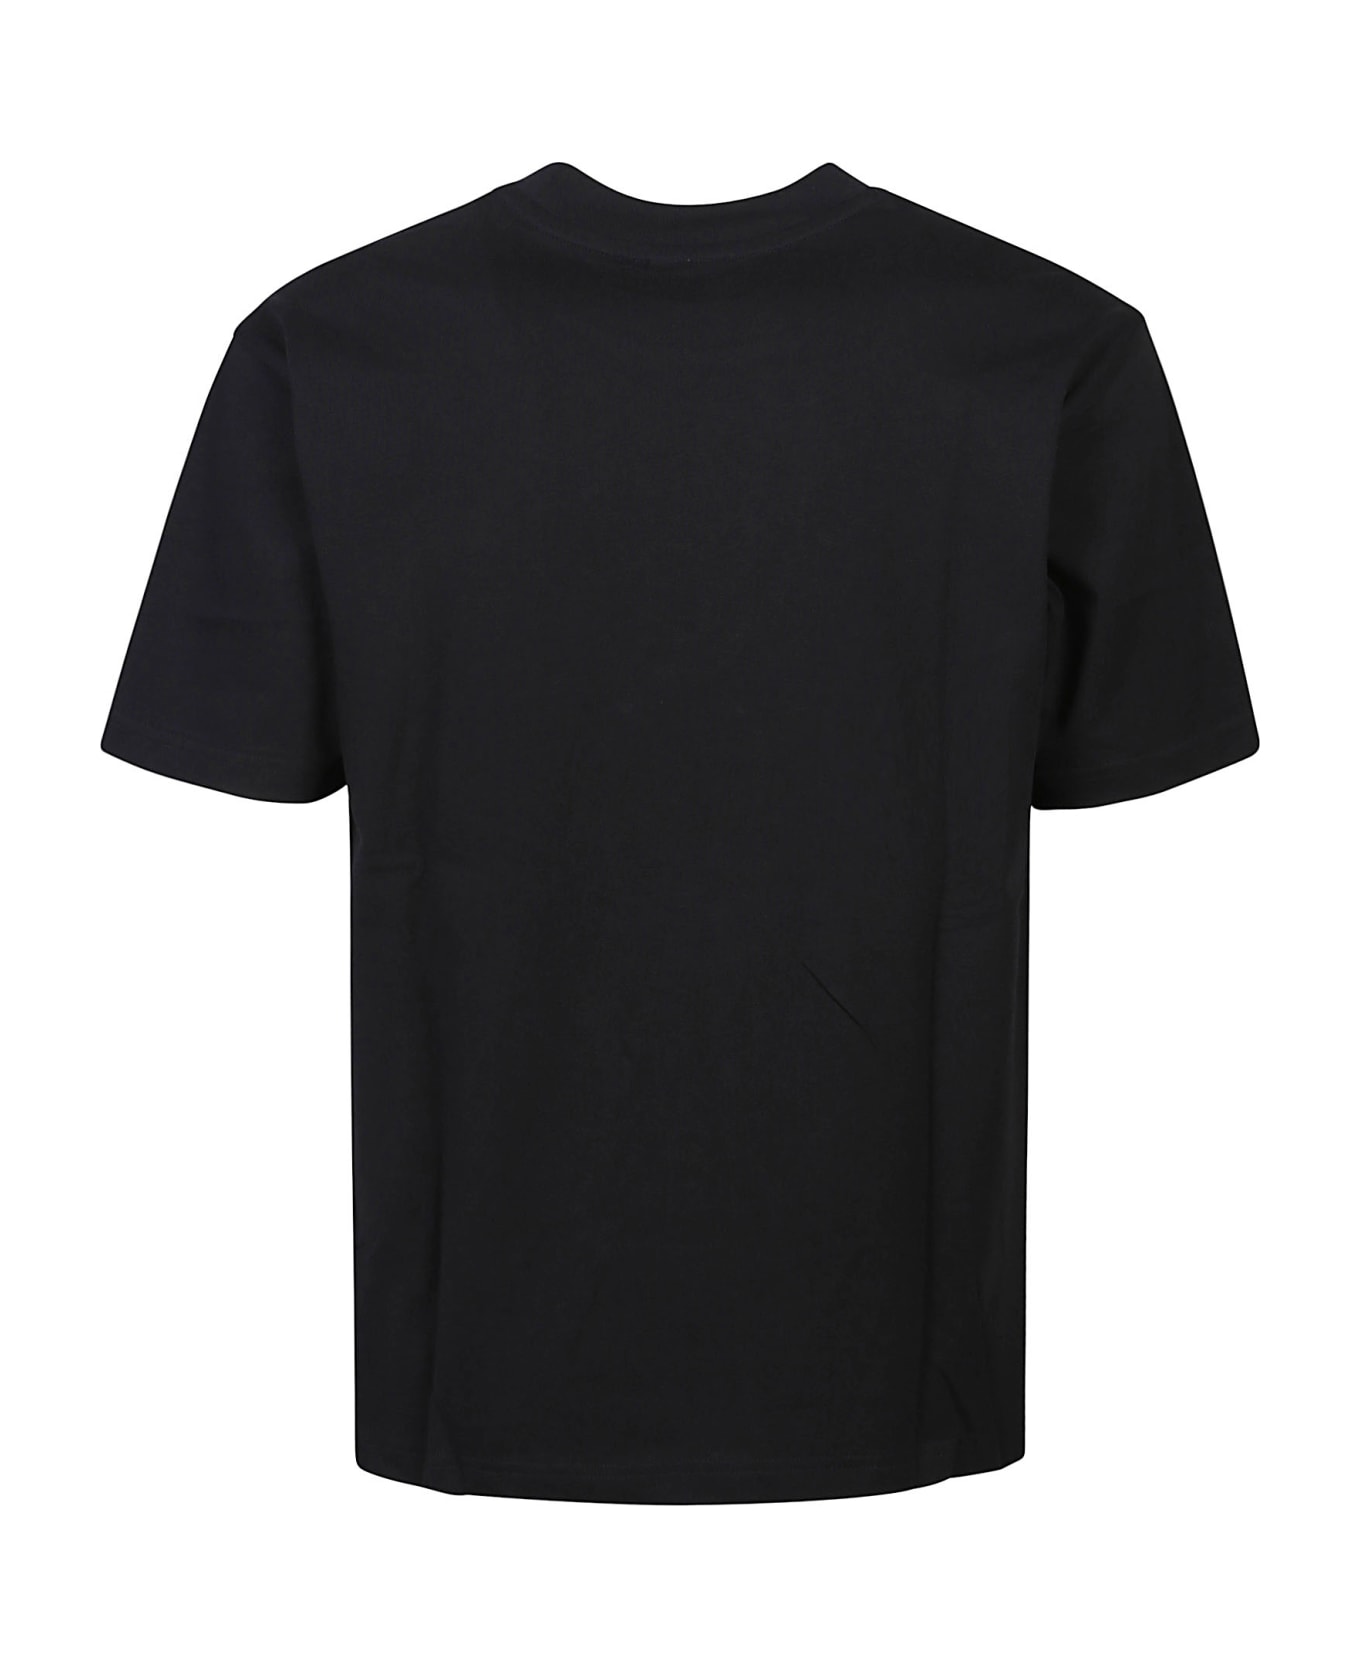 New Balance Athletics Models Never Age Relaxed T-shirt - Black